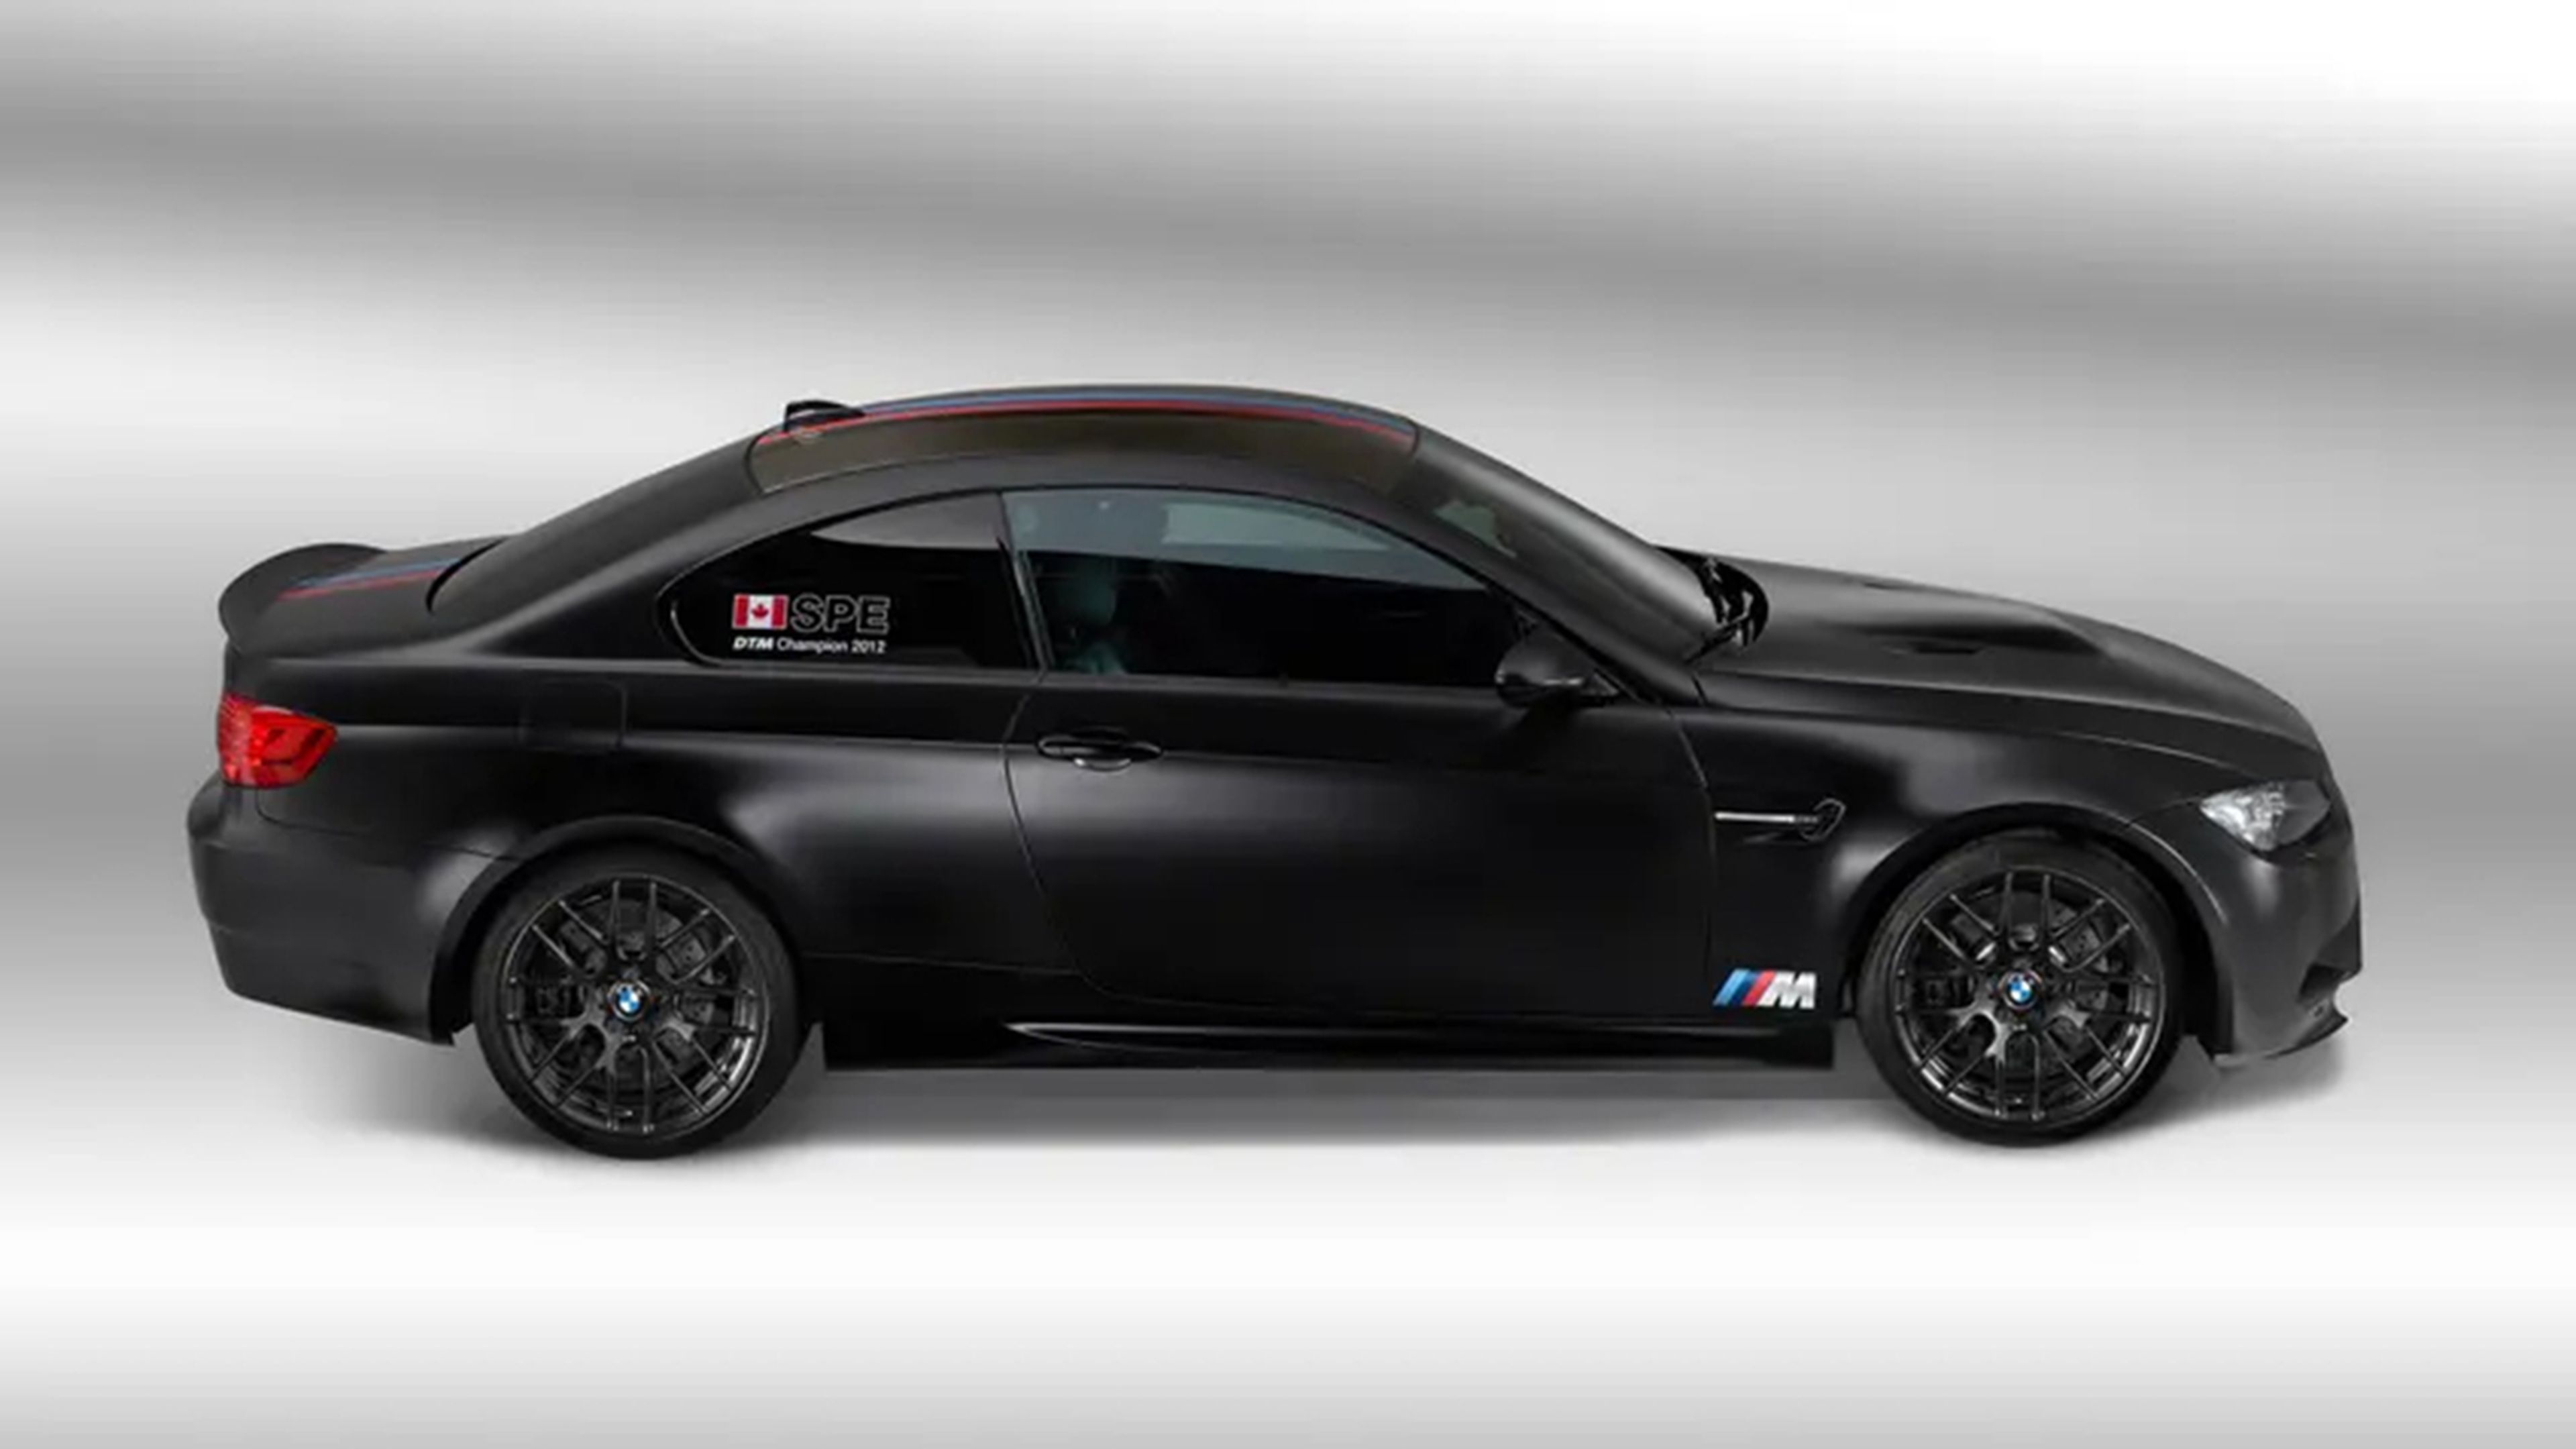 BMW M3 DTM 2012